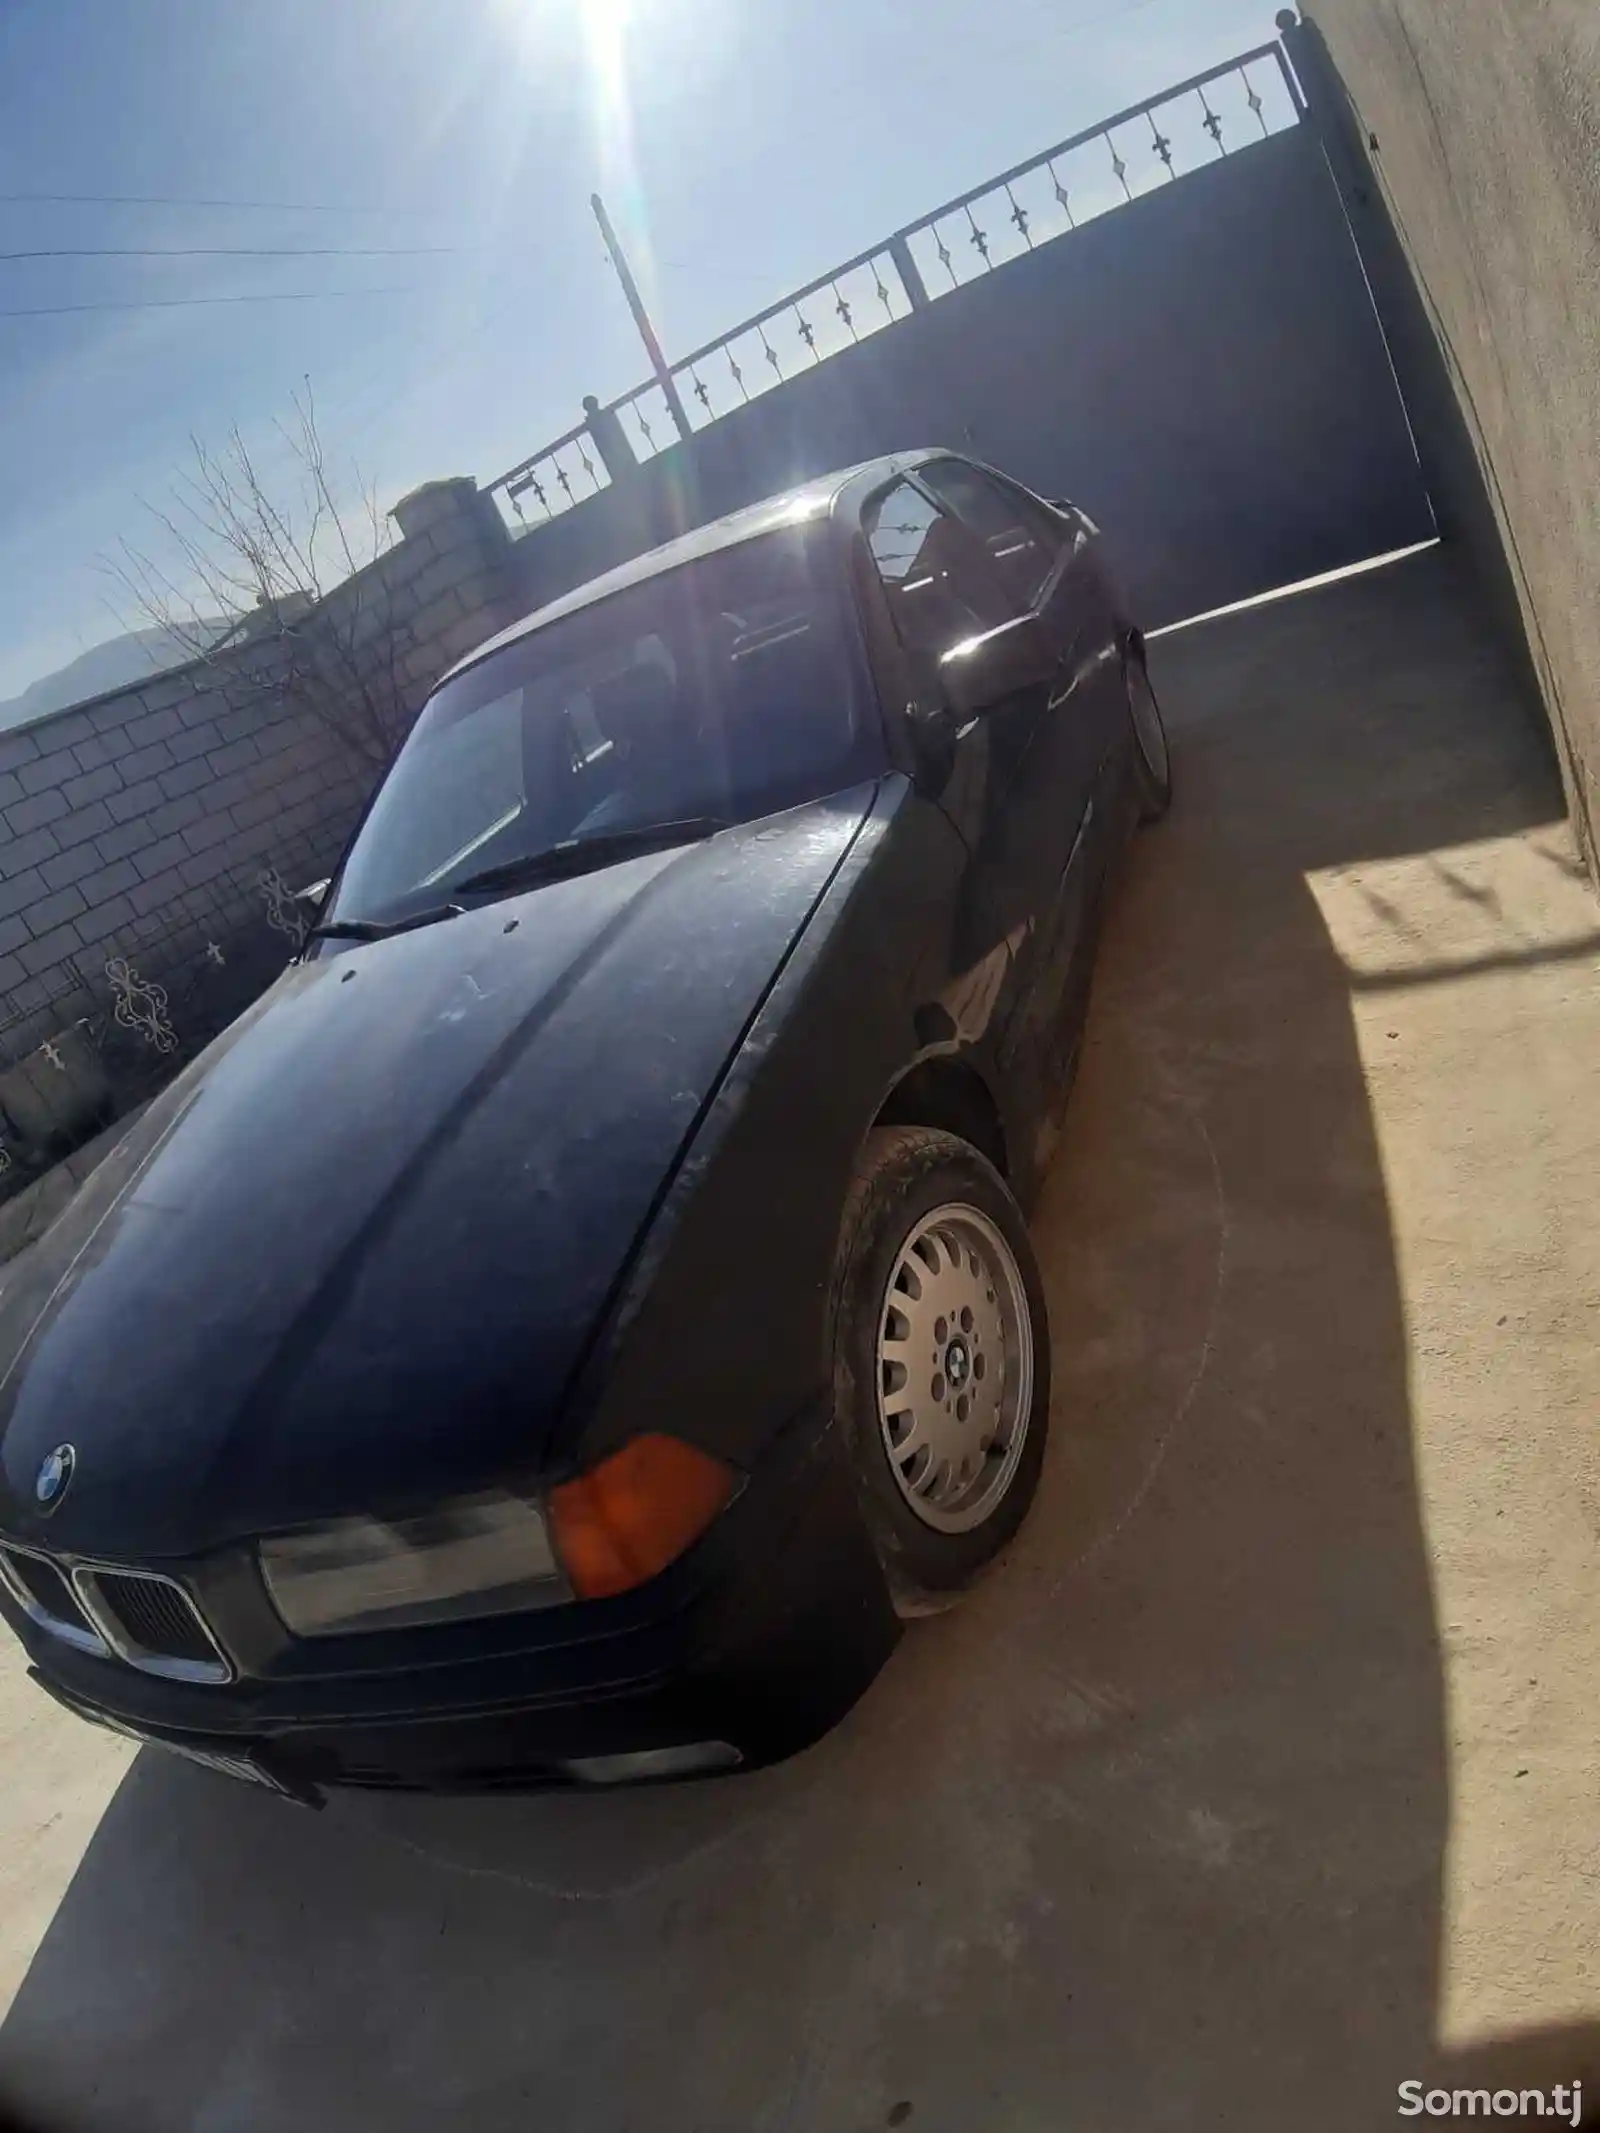 BMW 3 series, 1991-3